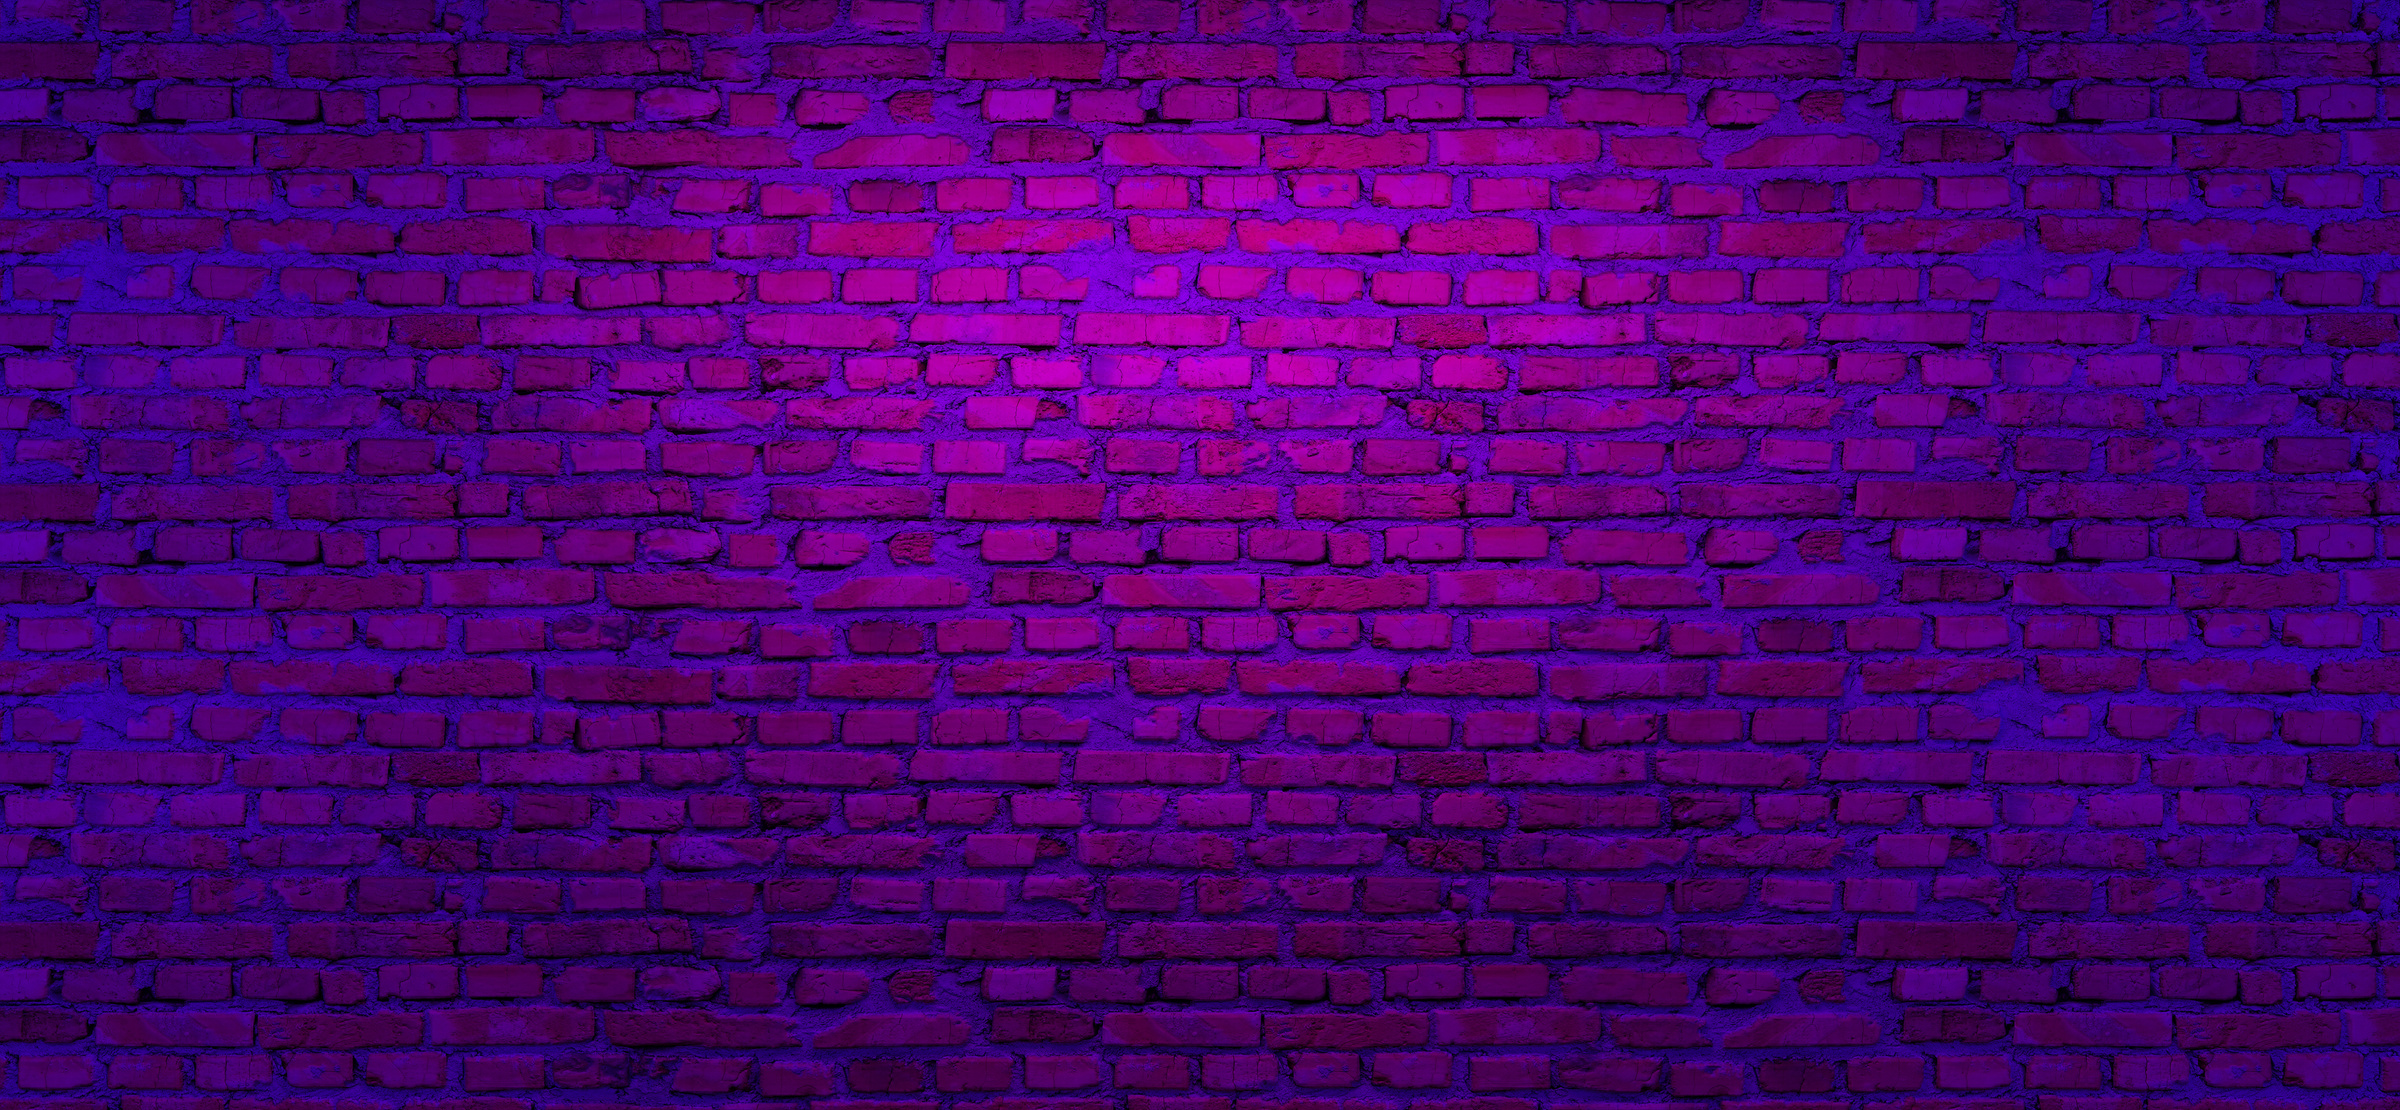 Neon brick wall background concept. 3d render